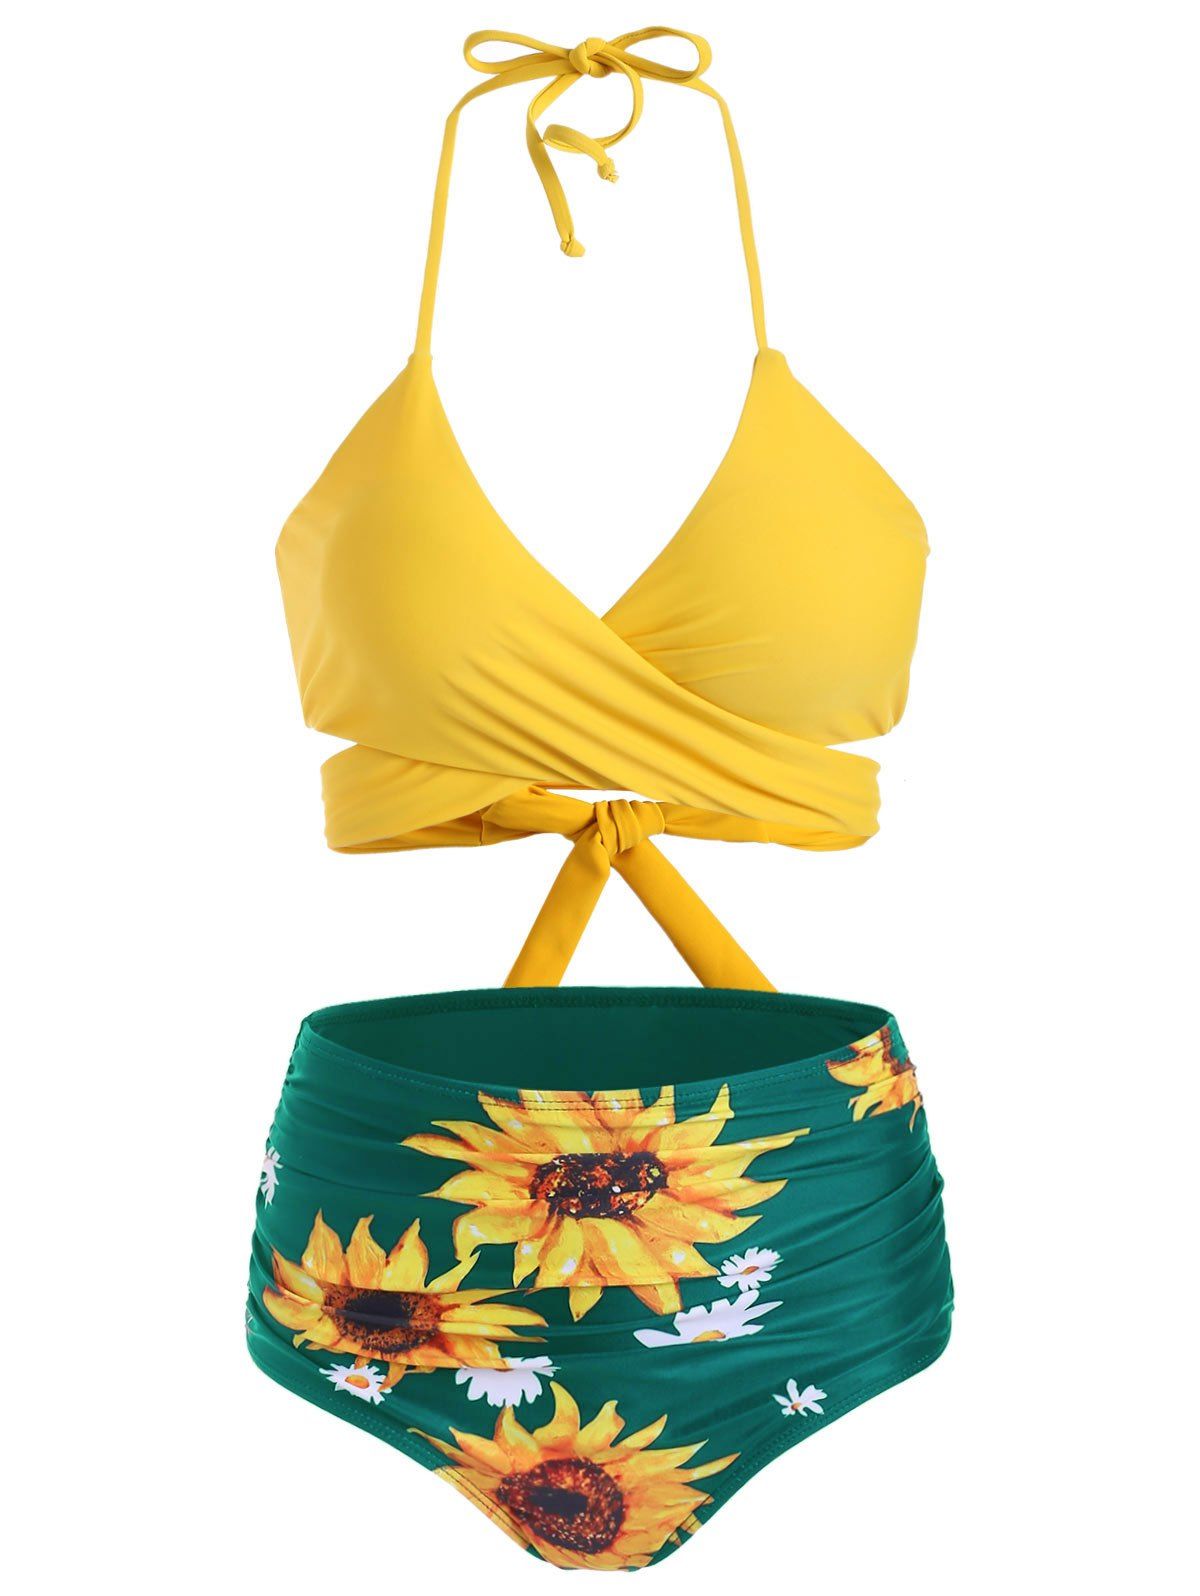 Tummy Control Swimsuit Wrap Bathing Suit Sunflower Print Full Coverage Halter Bikini Swimwear - SEA TURTLE GREEN M